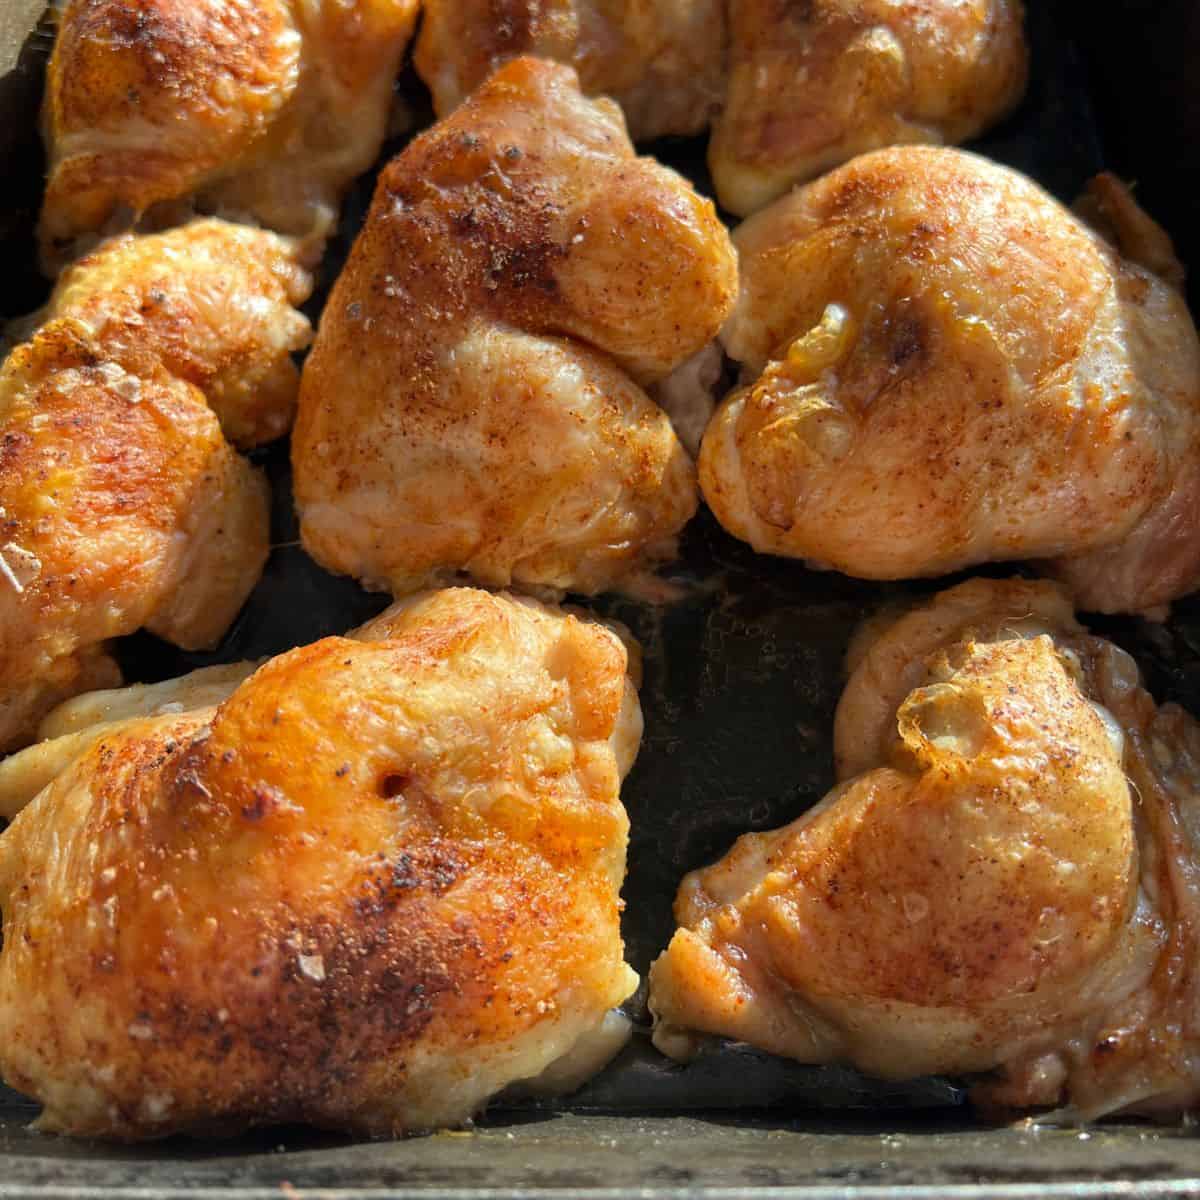 Roasted chicken in roasting pan.